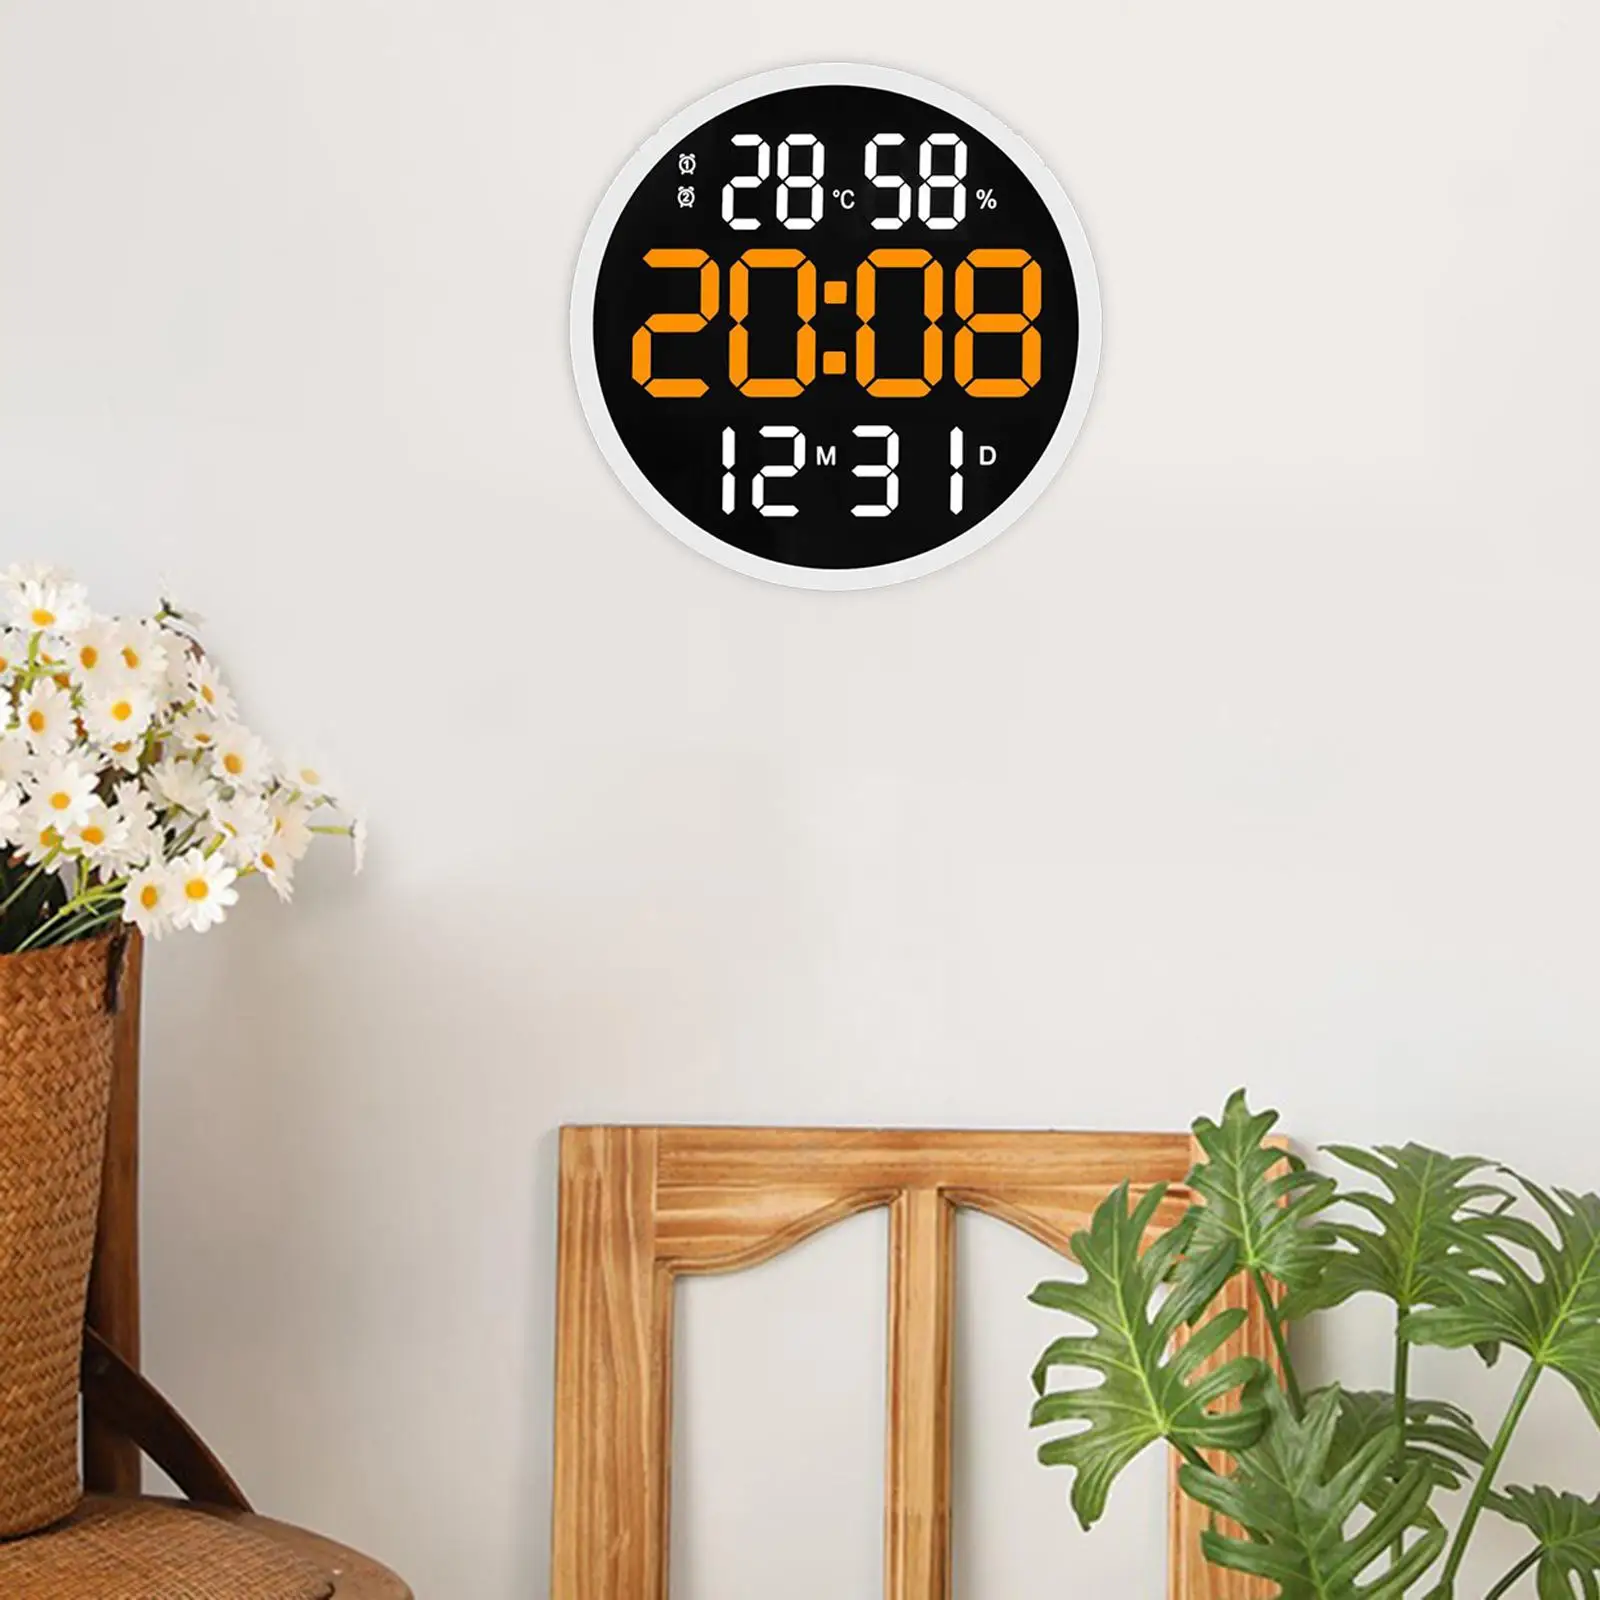 Round 12 inch Digital Wall Clock Adjustable Brightness Large Display 12/24H LED Alarms Clock for Restaurant kitchen Bedroom